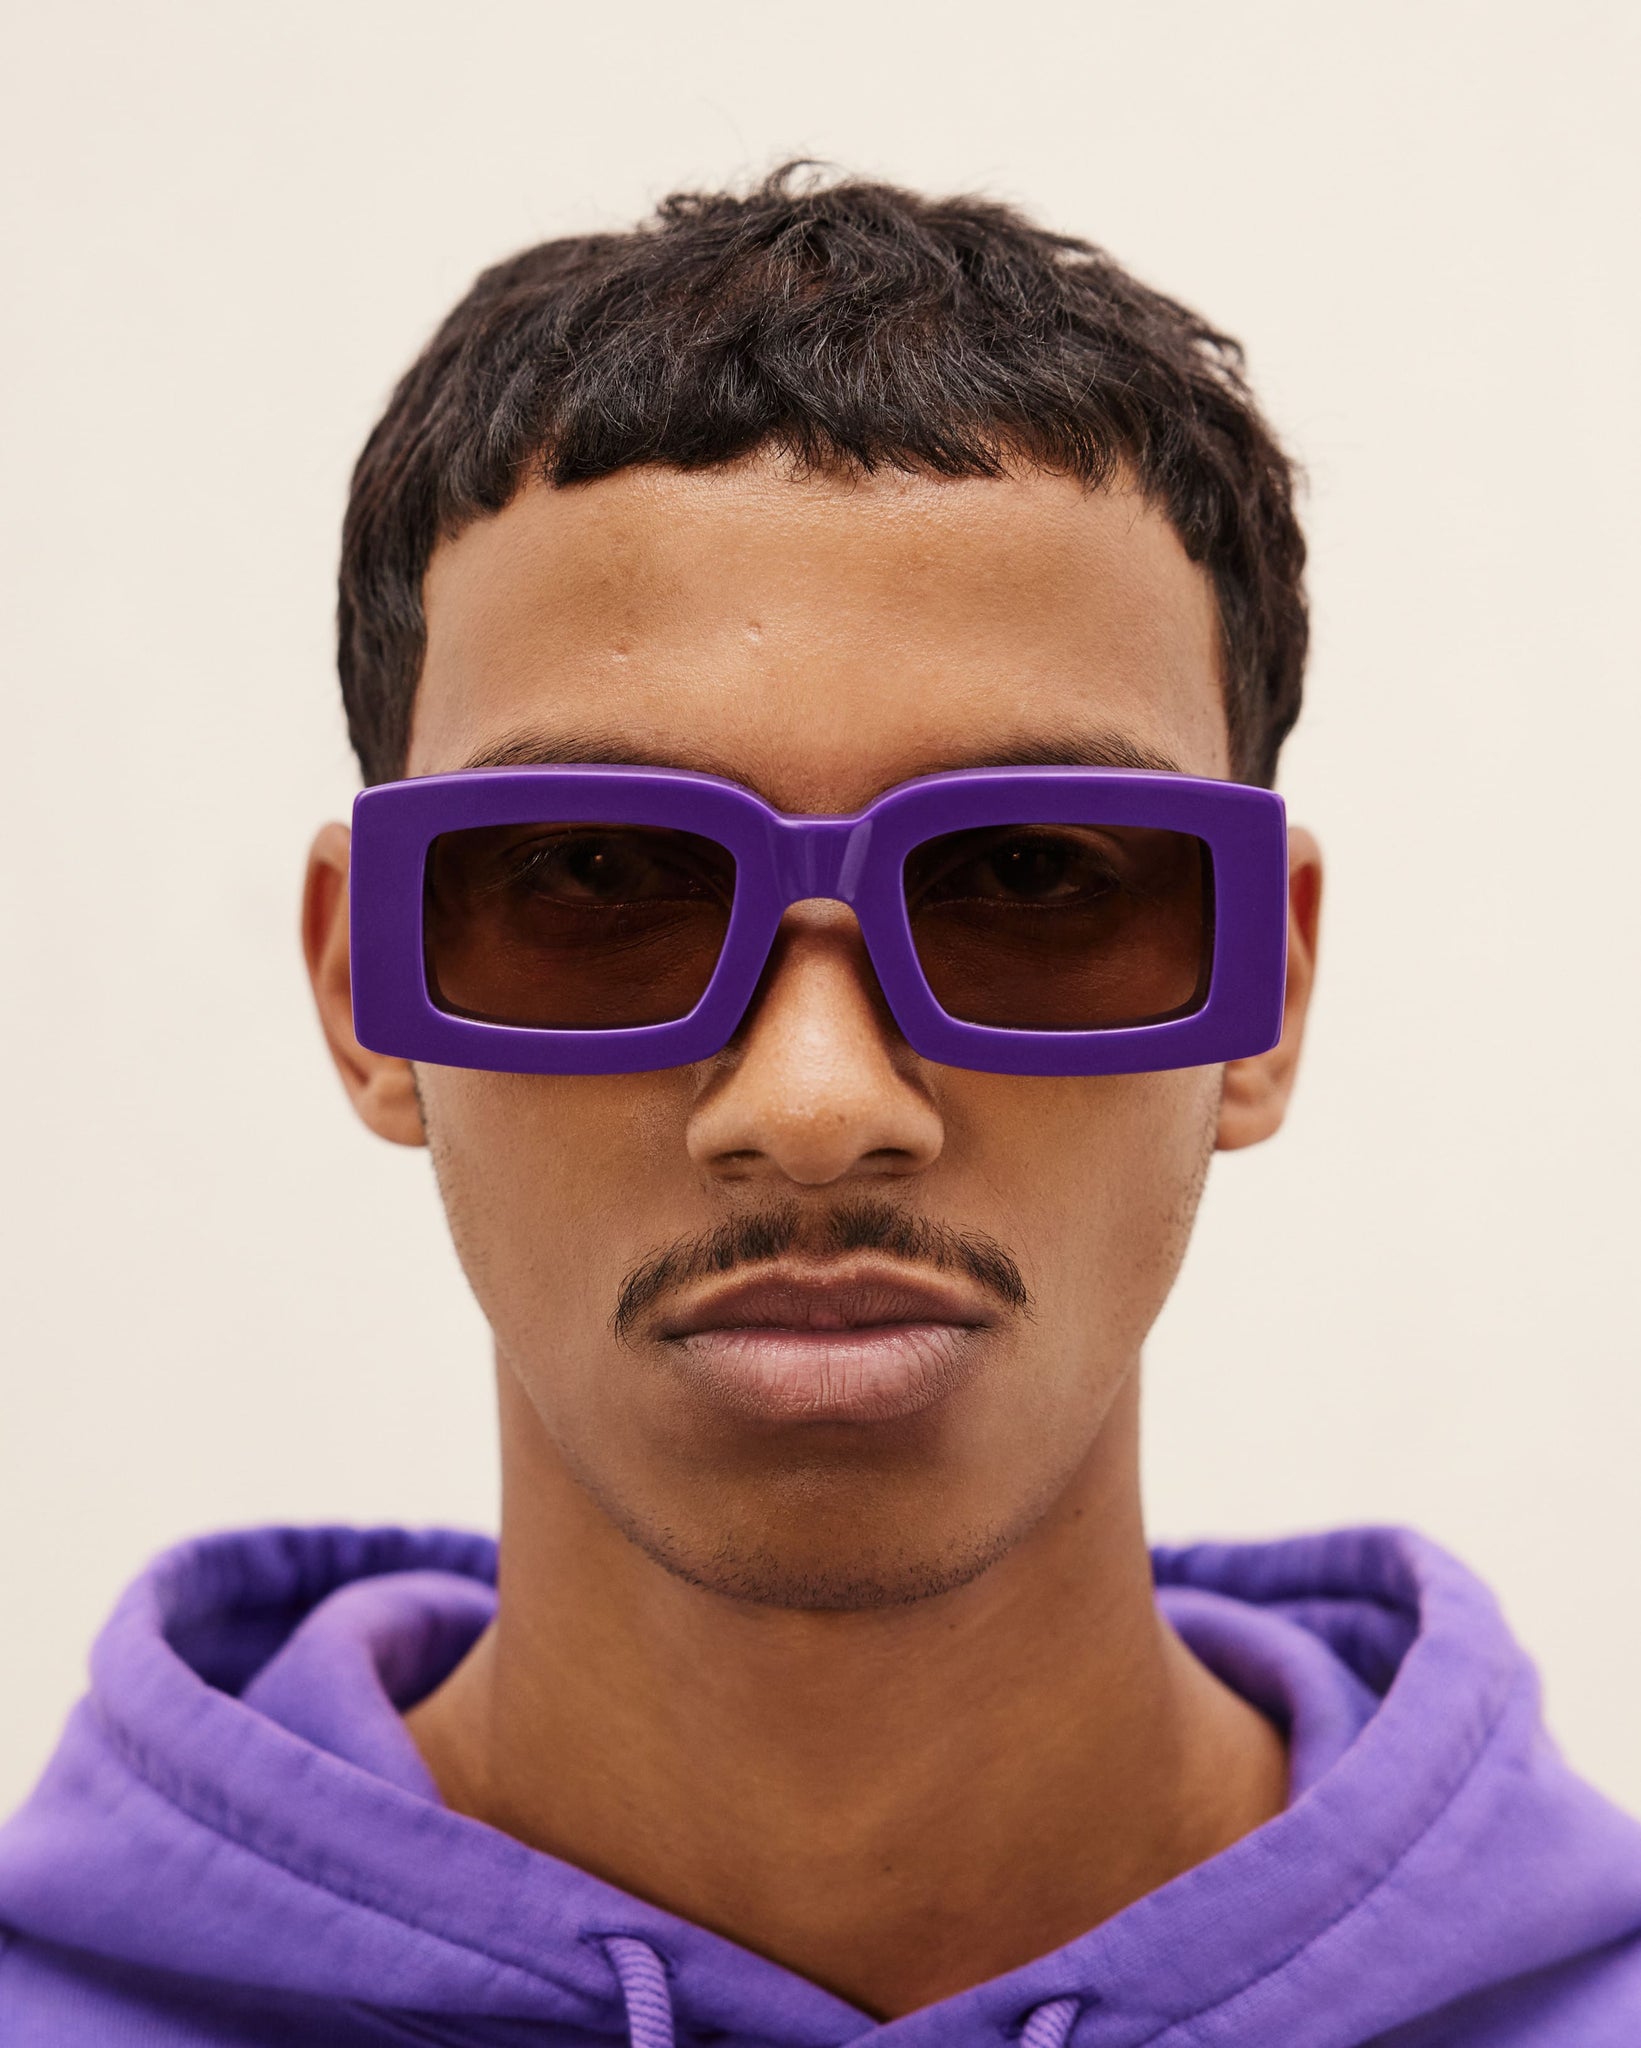 Les lunettes tupi - multi purple